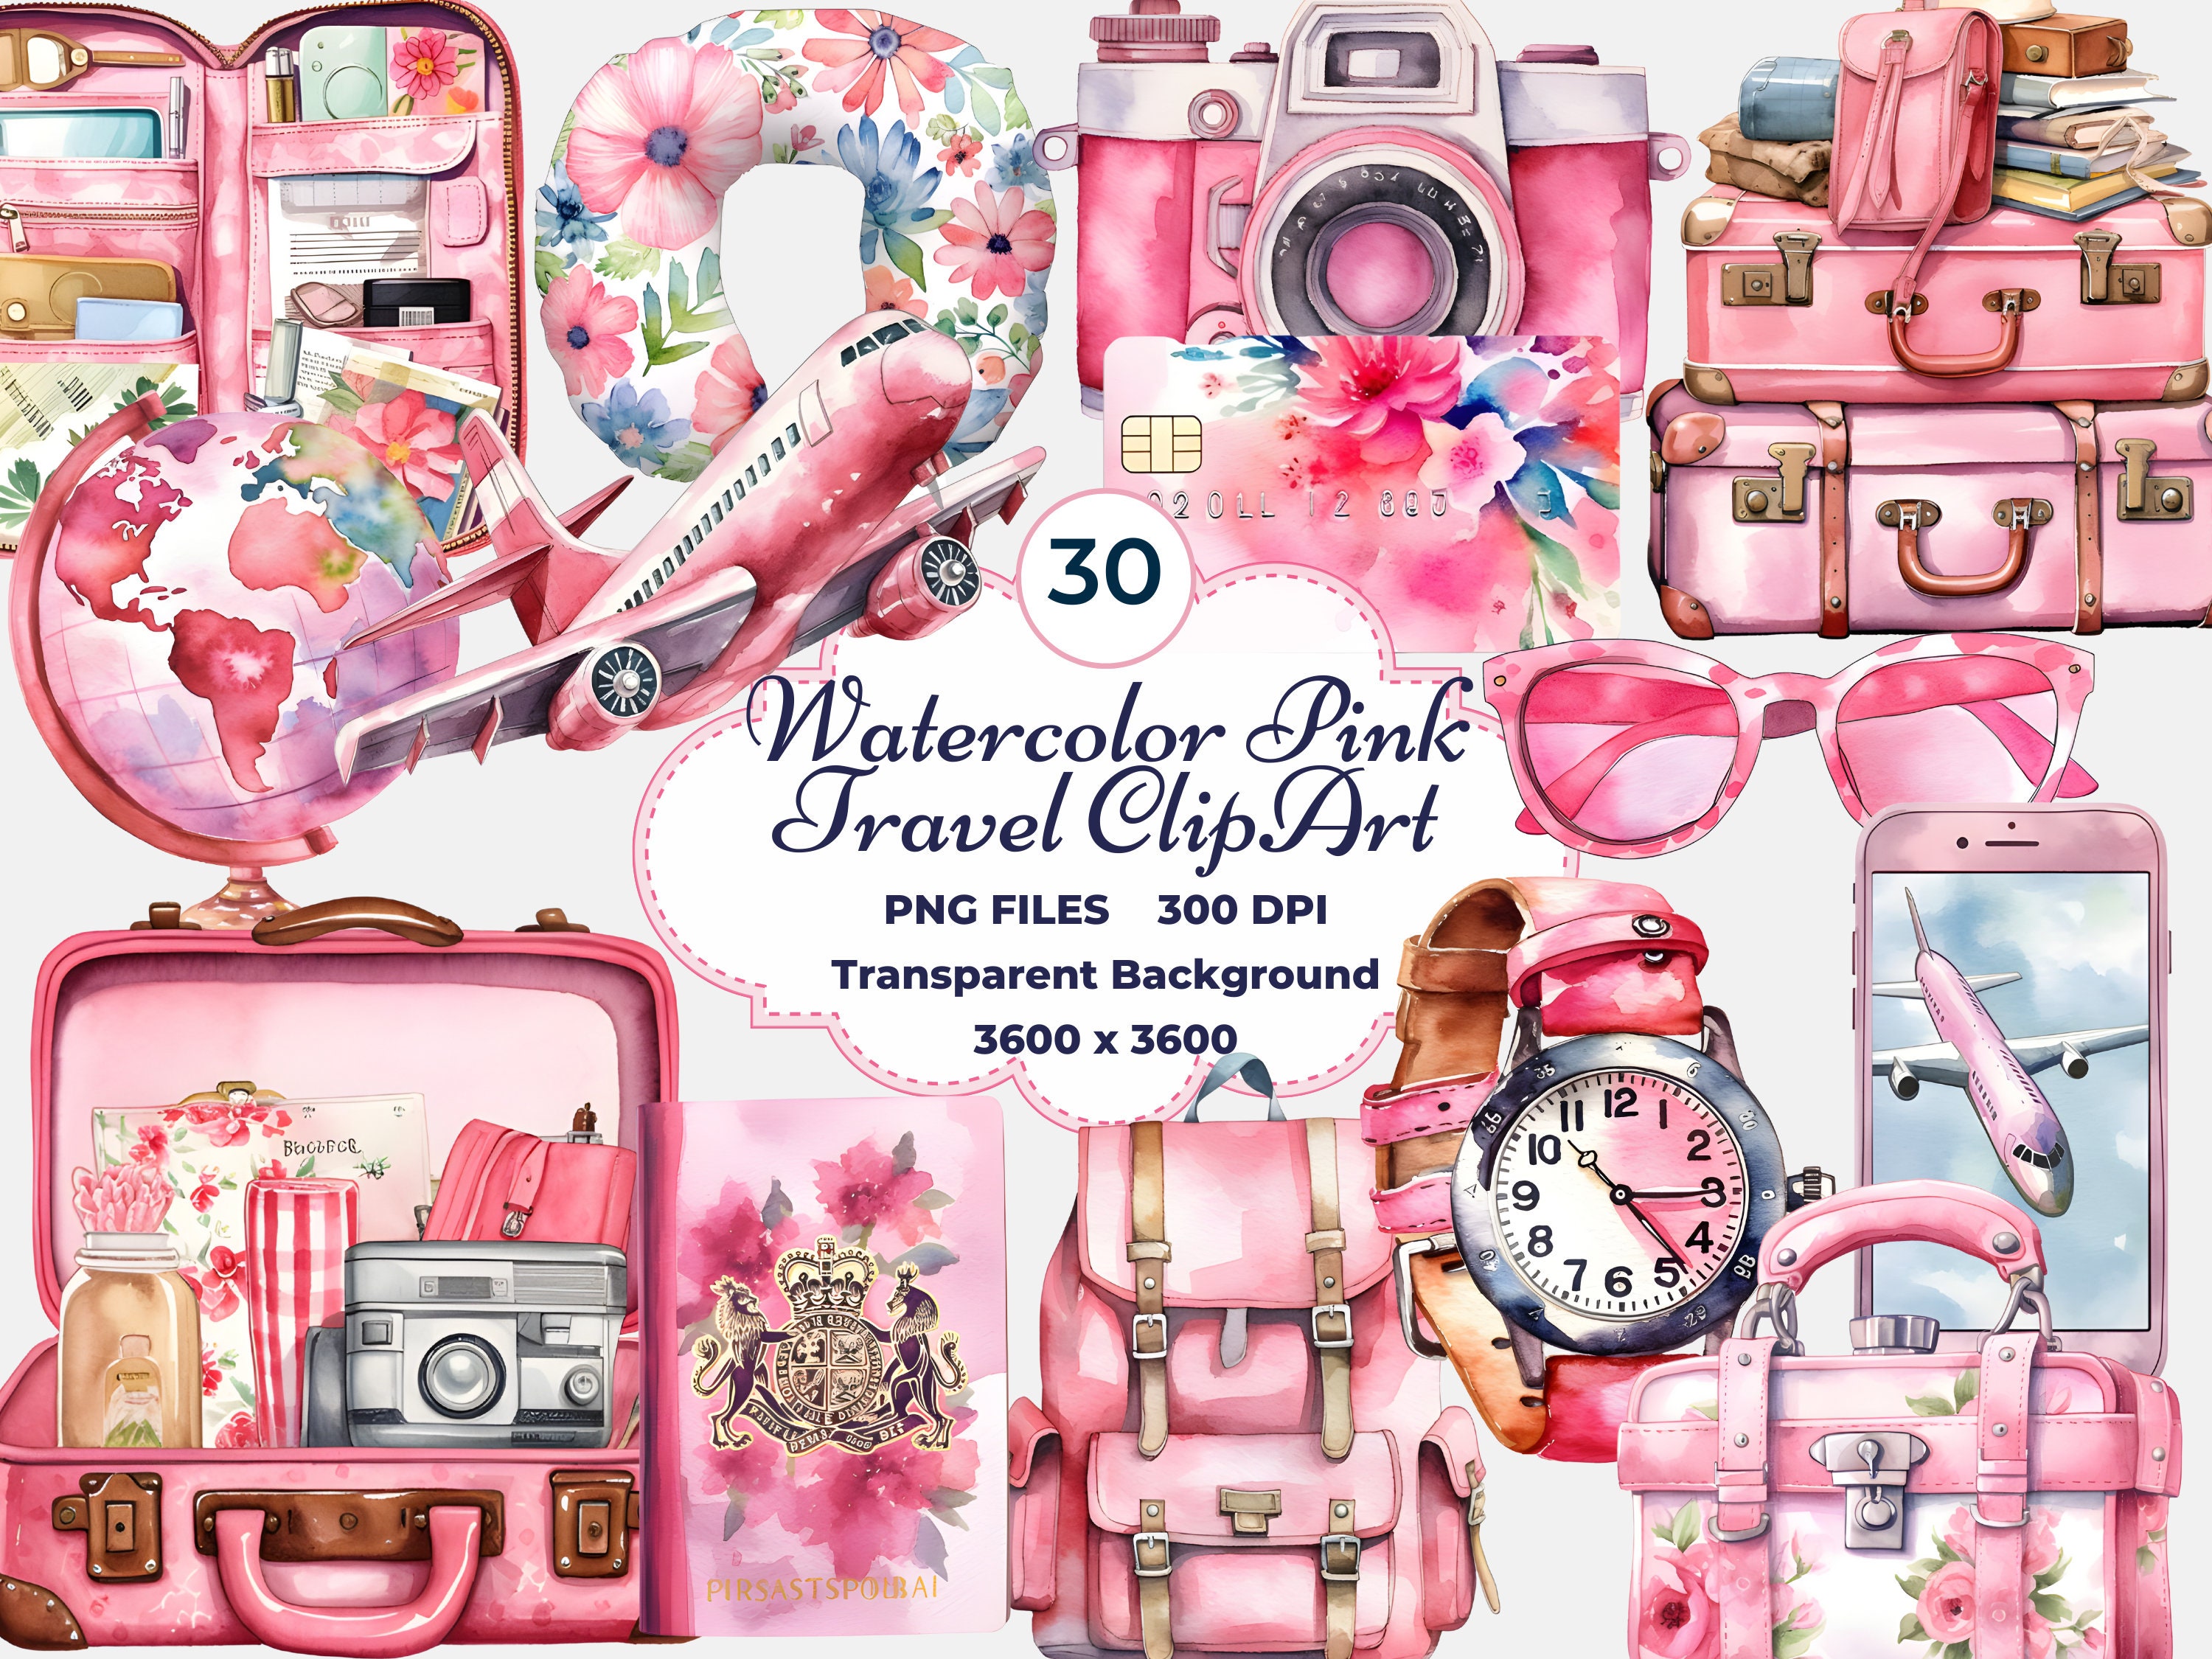 NEW Travel Design Passport Holder Cover Wallet Pink TD1603 Pink Airplane ID